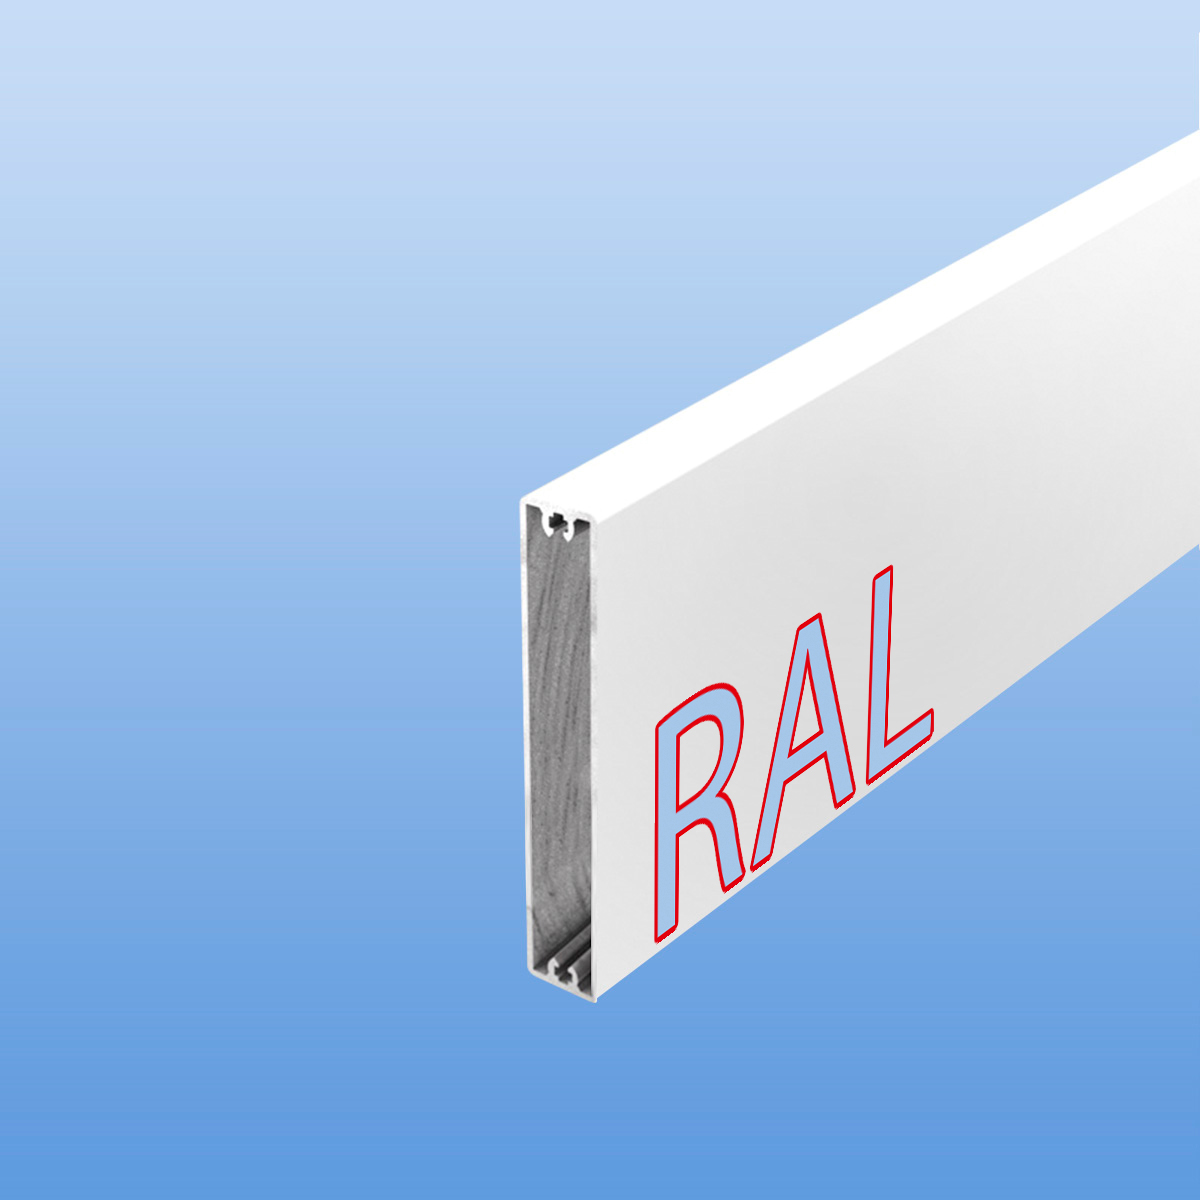 Balkonbretter aus Aluminium 100 mm breit nach RAL - Schwarztöne